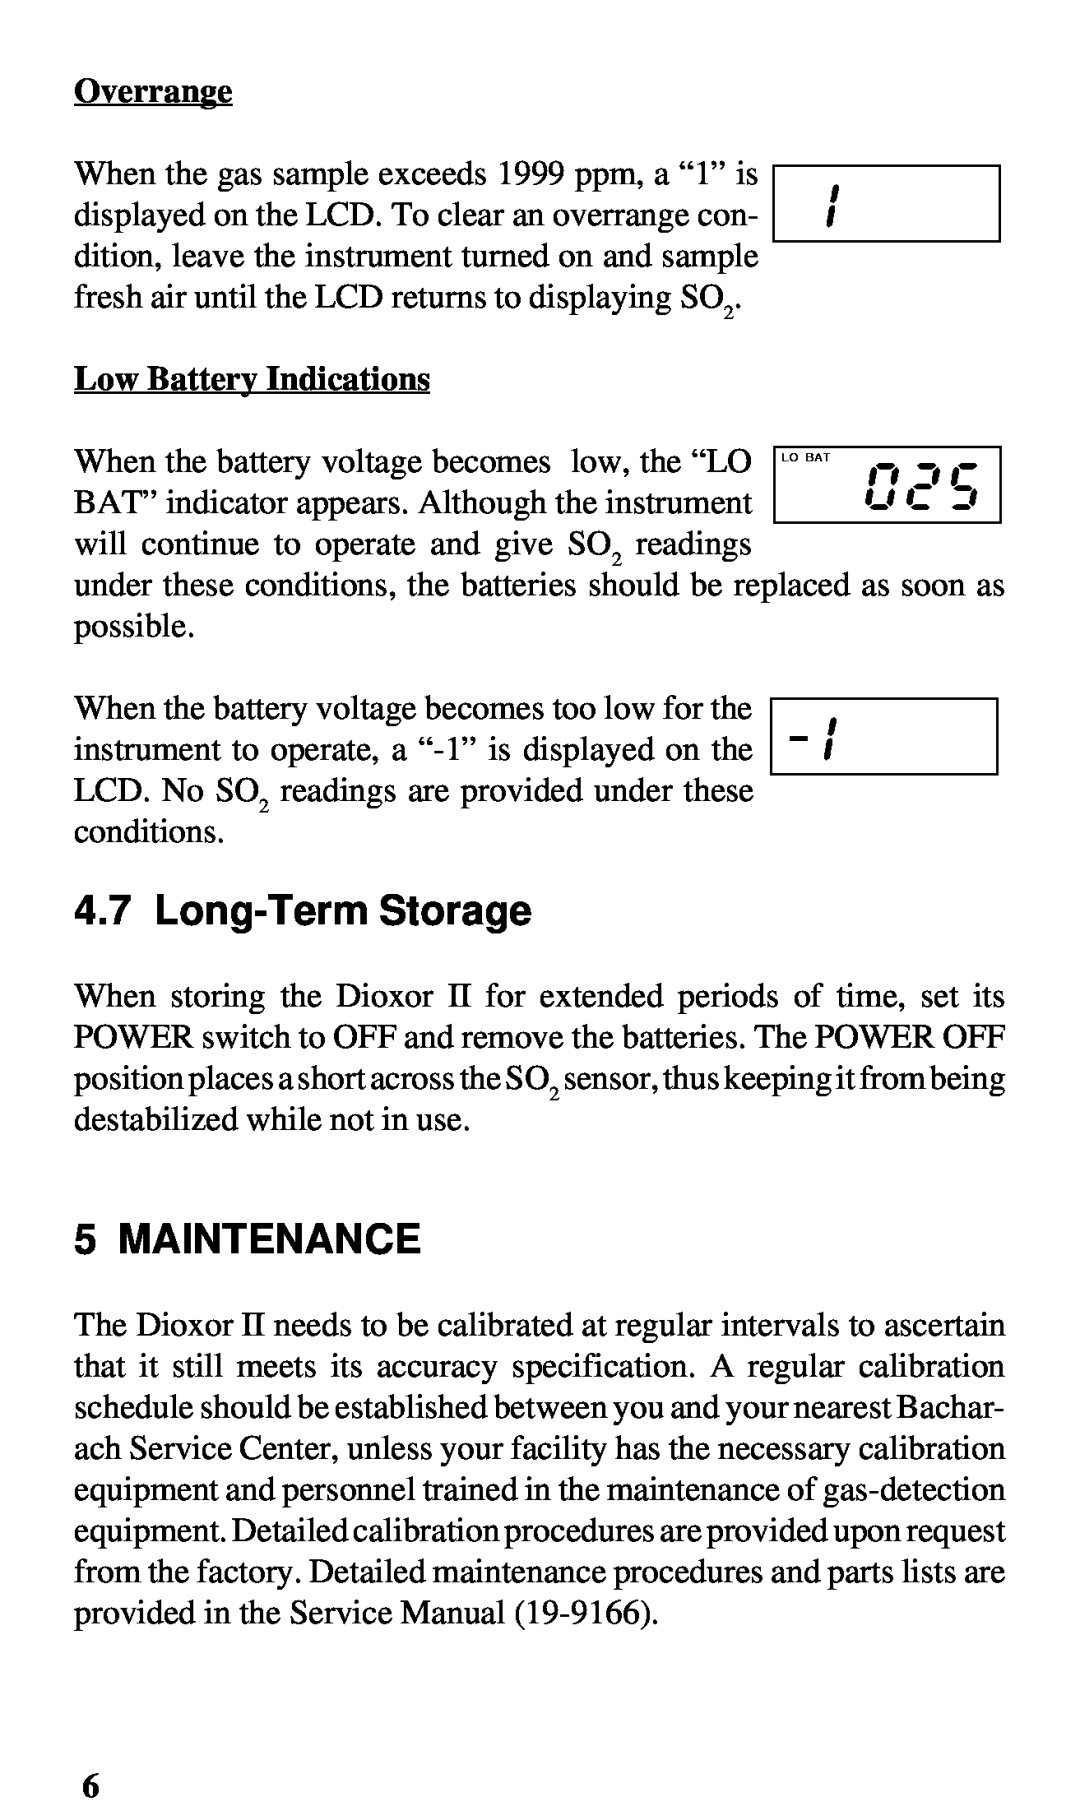 Bacharach 19-7043, 19-7038 manual Long-TermStorage, Maintenance, Overrange, Low Battery Indications 